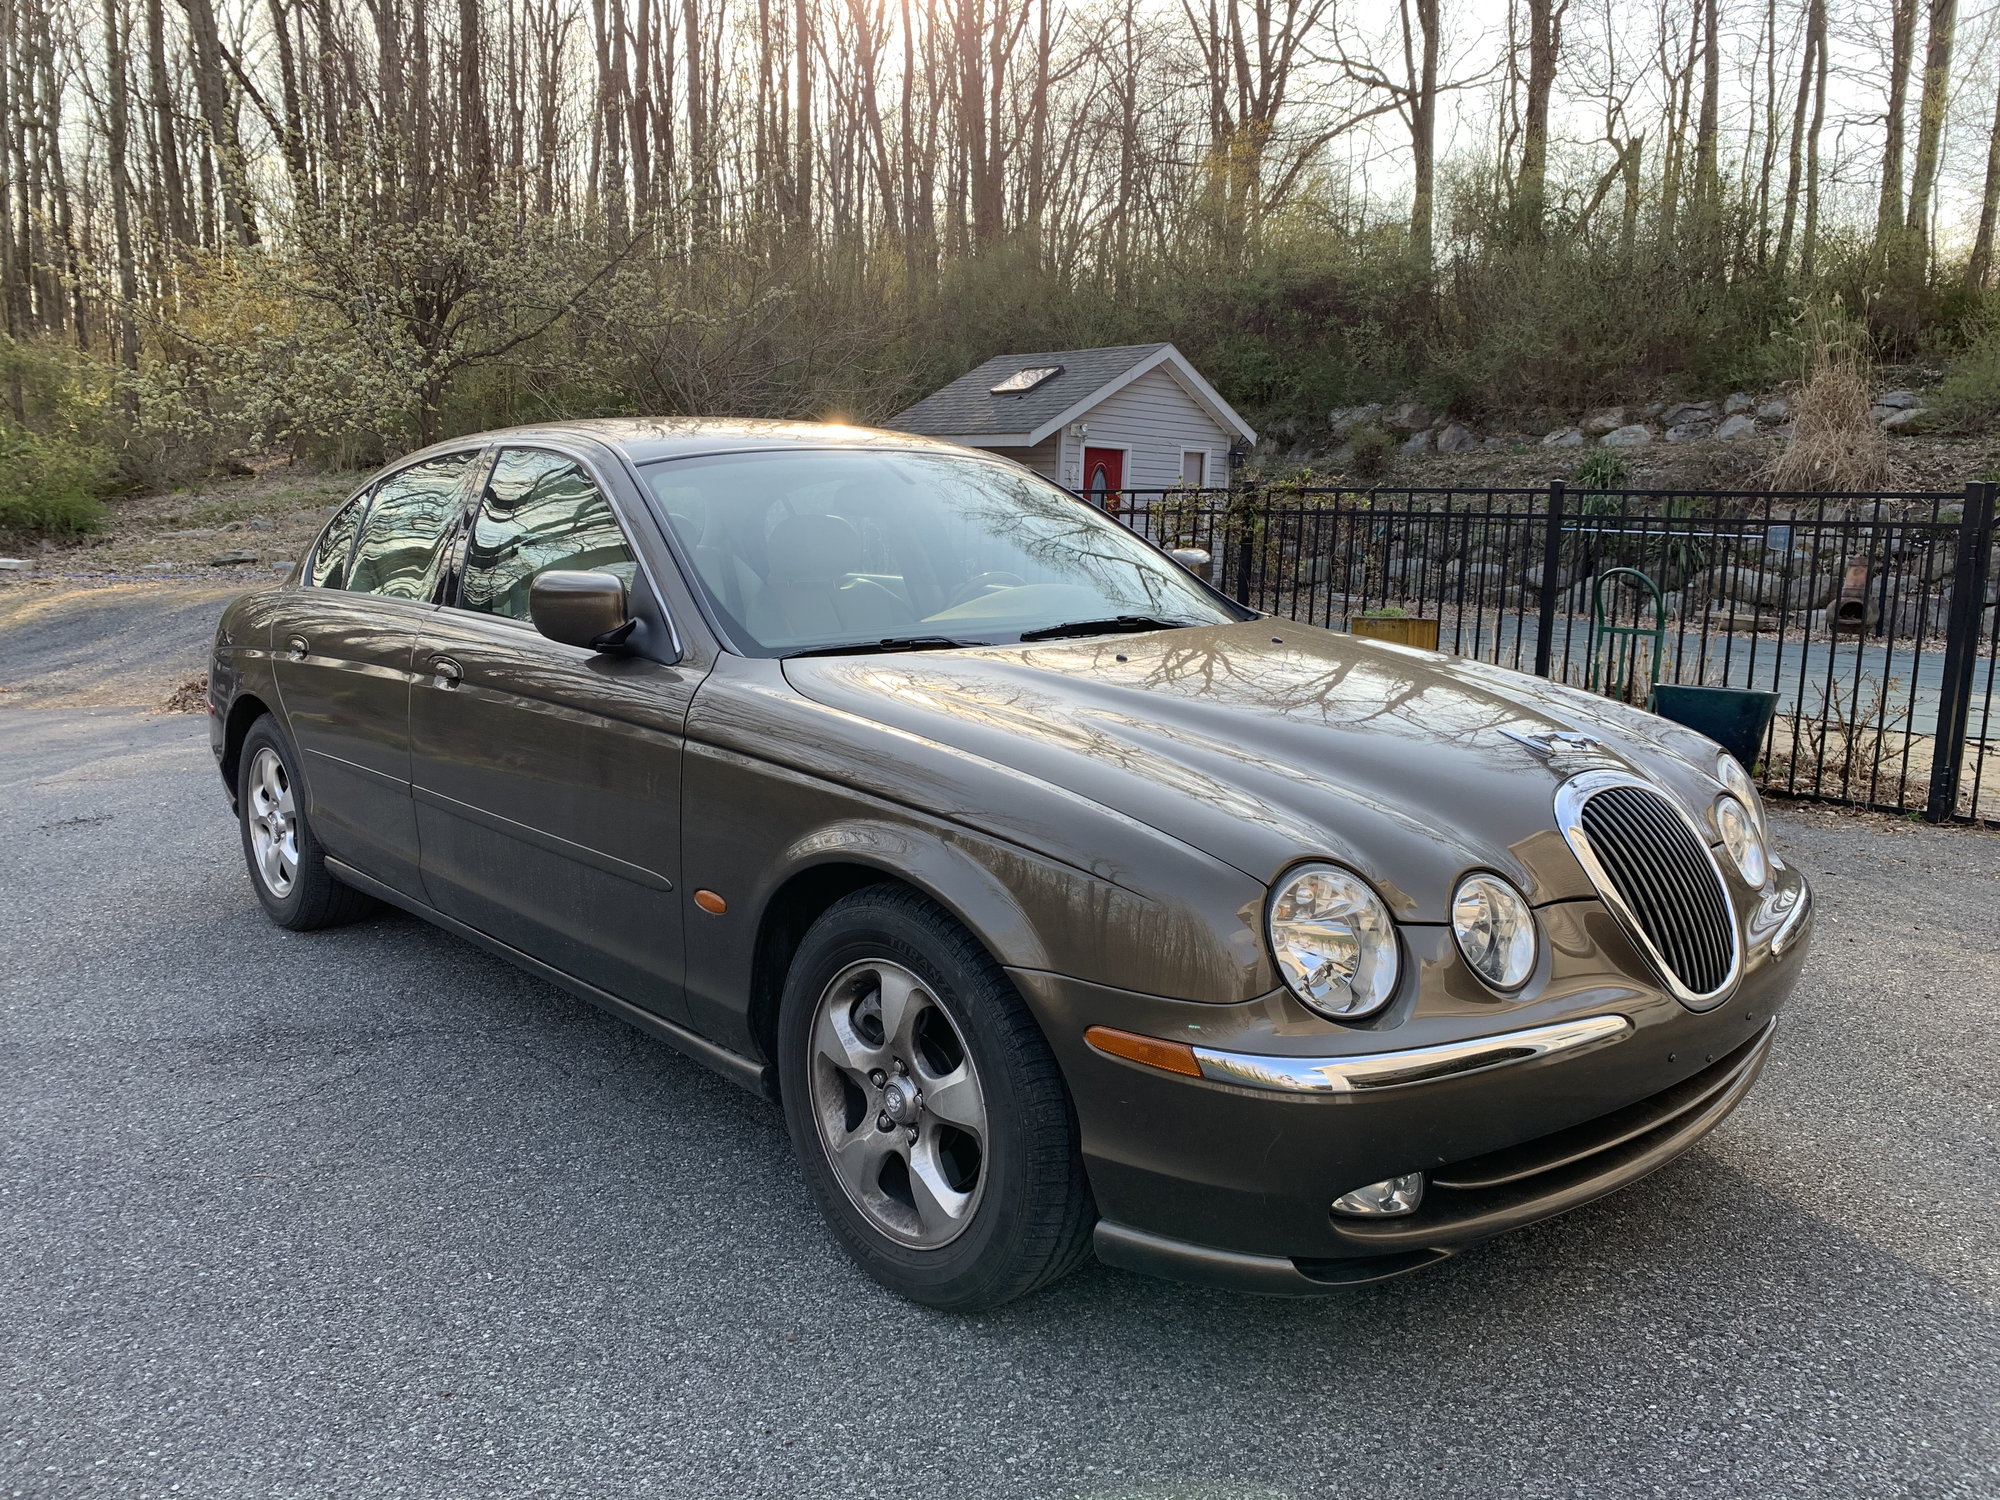 2001 Jaguar S-Type - Excellent Condition 2001 Roman Bronze 3.0 S-type - Used - Upper Mt Bethel, PA 18351, United States